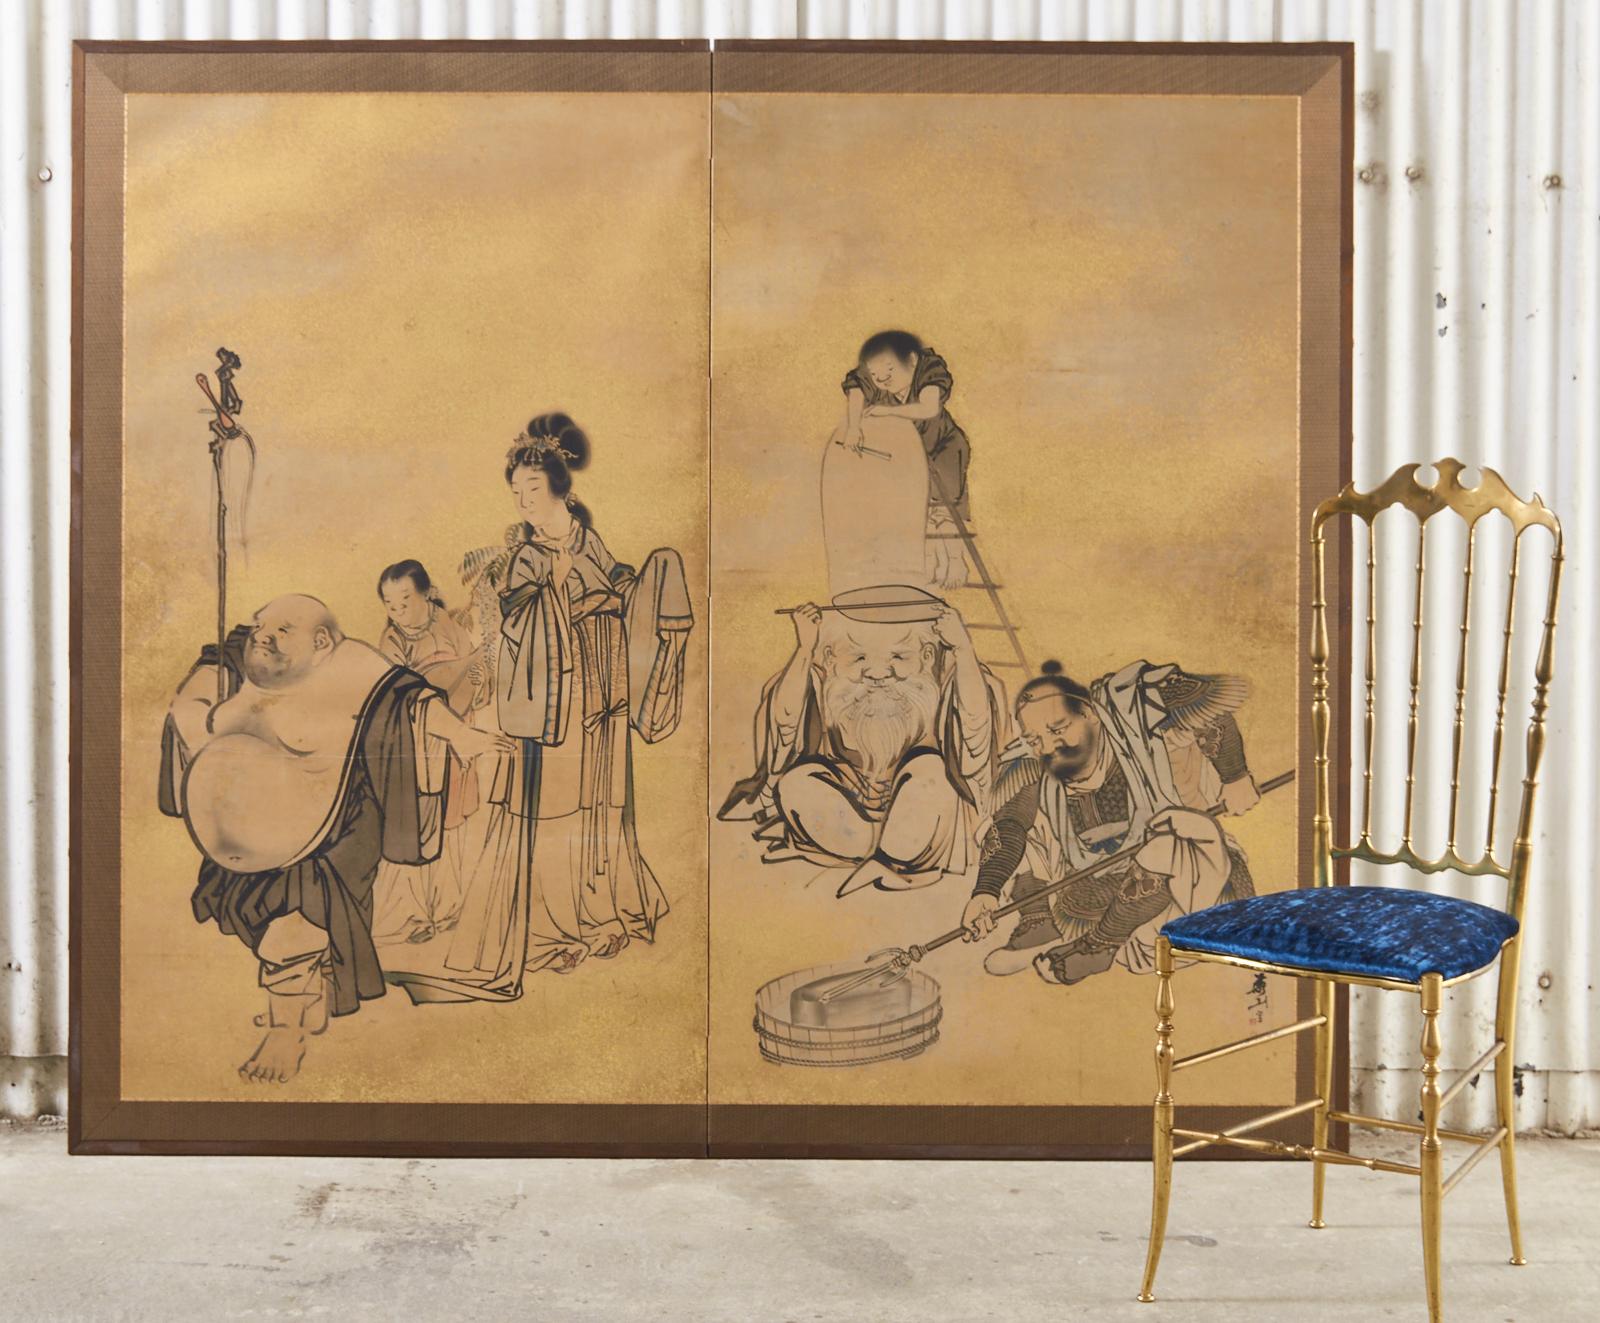 Whimsical Japanese late Edo period two-panel screen circa 1800 by Yokoyama Kazan (Japanese 1784-1837). The screen depicts four of the seven Gods or deities of good fortune. Hotei, Benten, Fukurokuju, and Bishamonten. Maruyama-Shijo School ink and